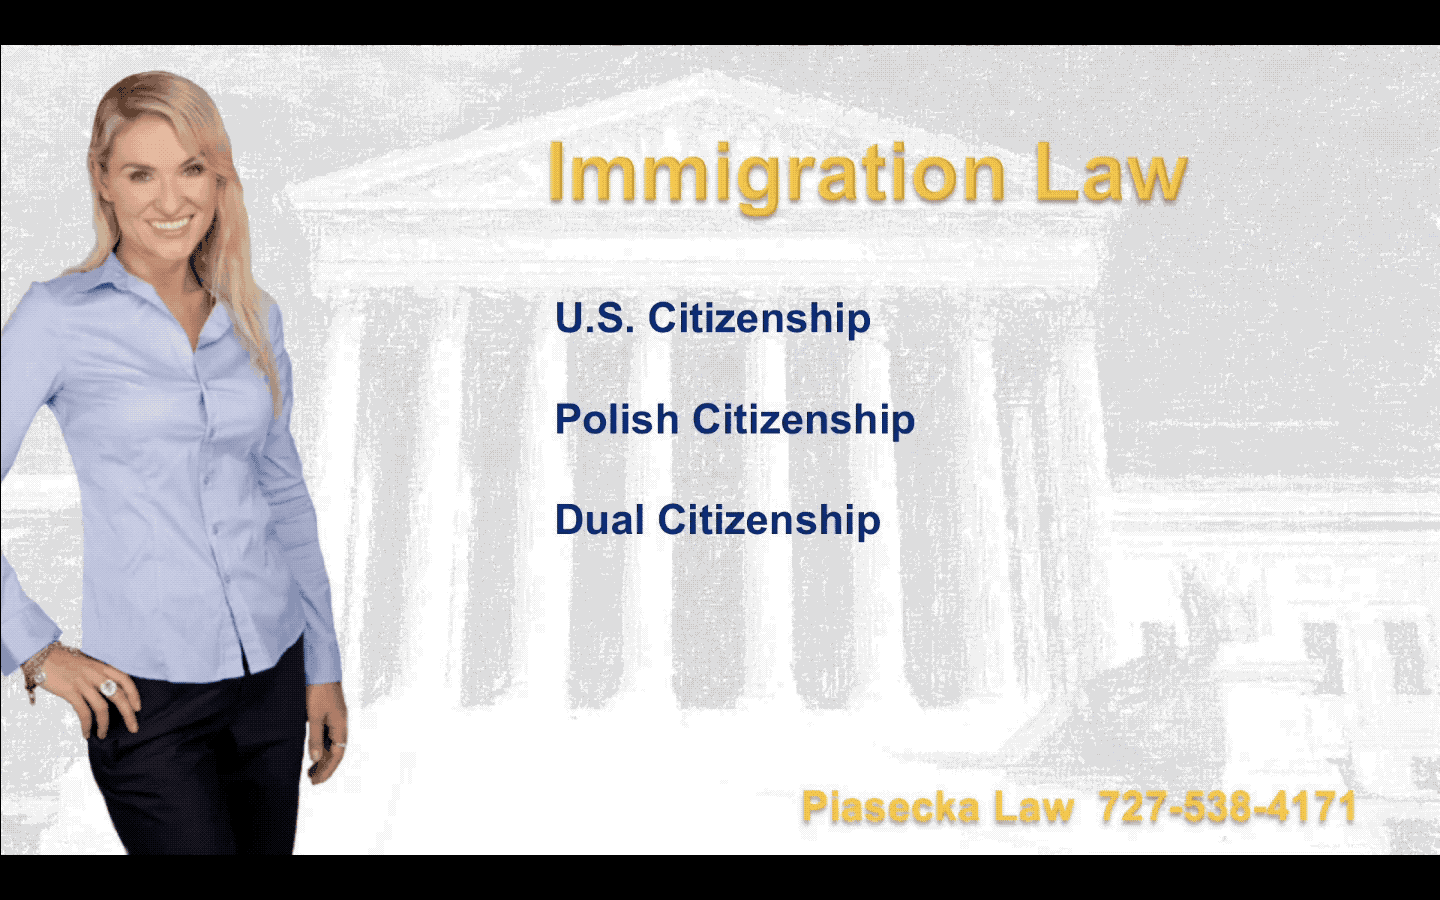 Piasecka Law 727-538-4171 Immigration Largo